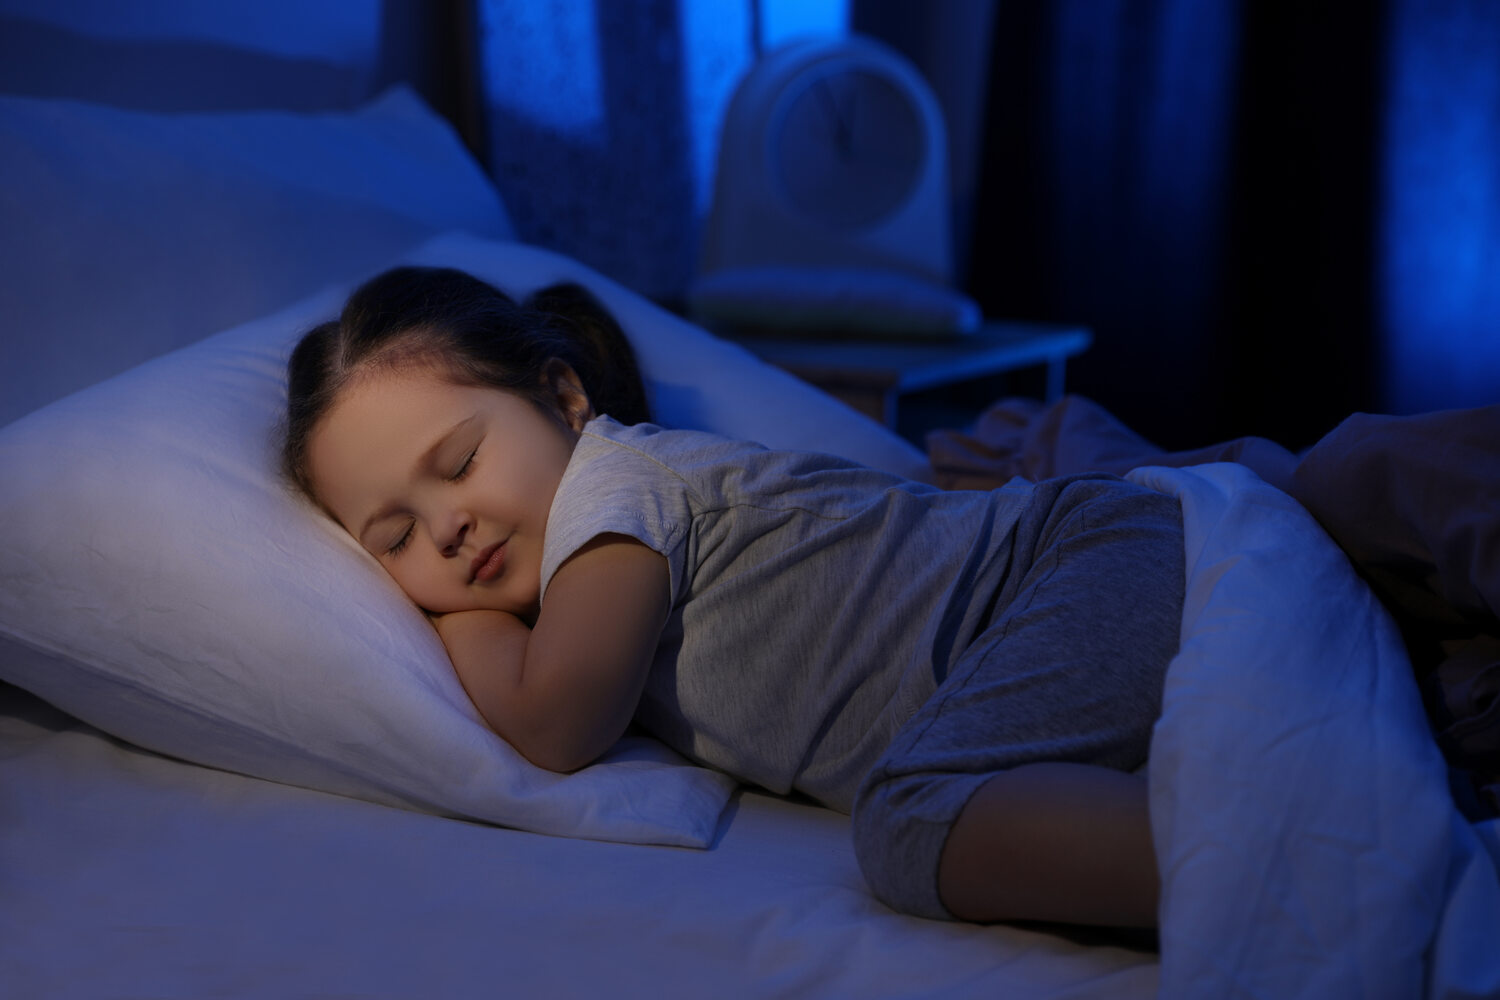 A little girl sleeping at night